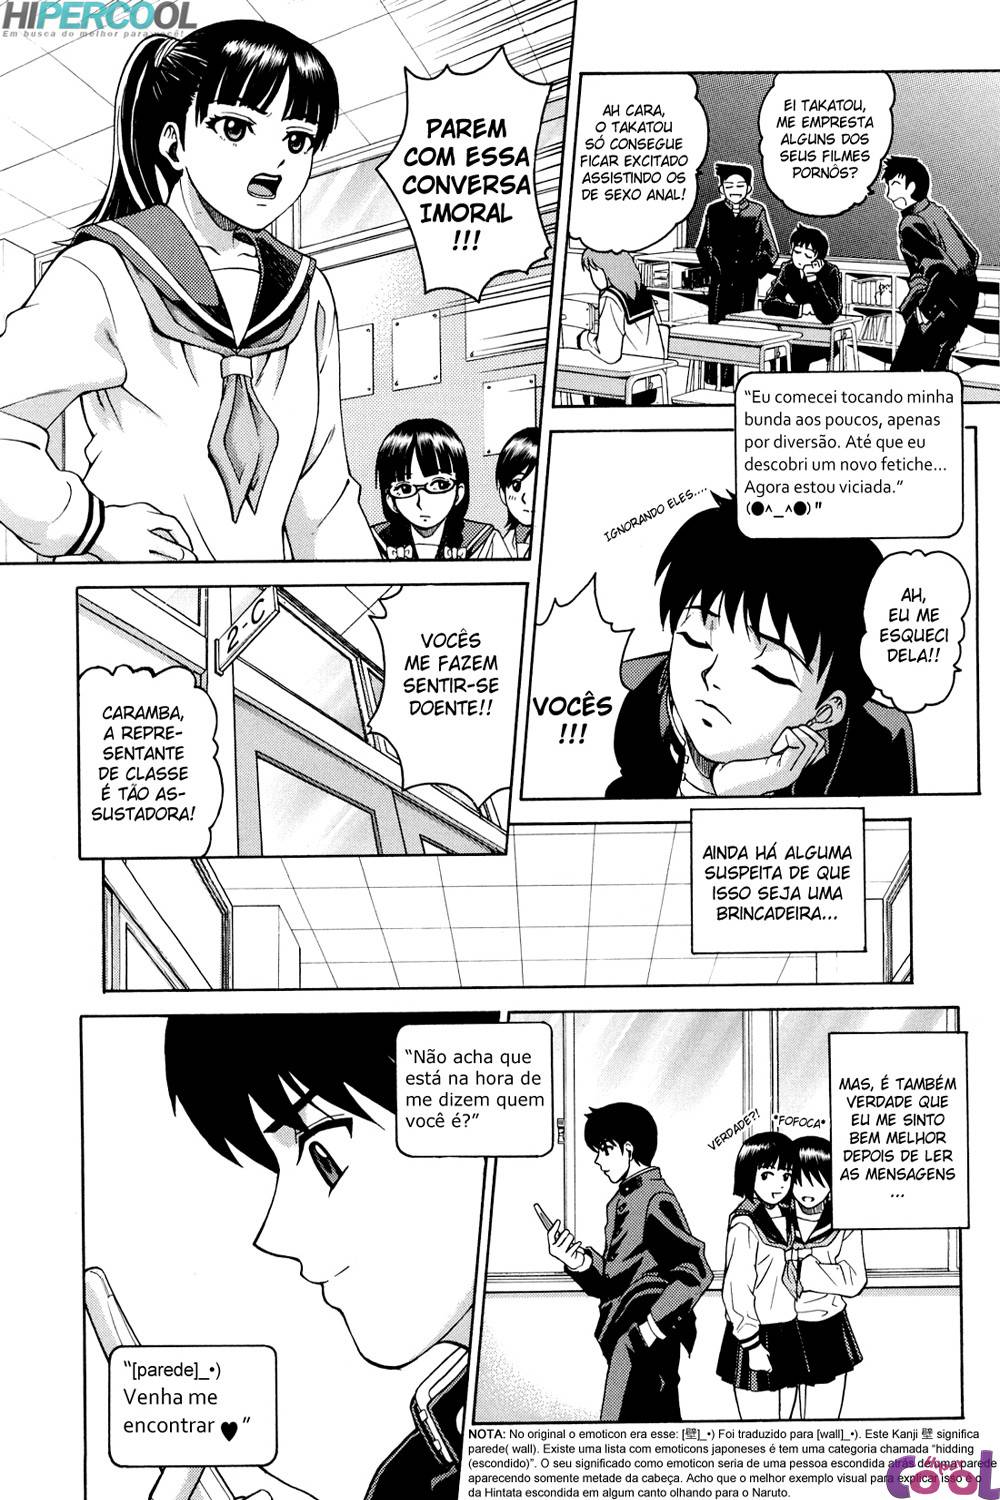 joshi-ana-chapter-05-page-04.0.jpg